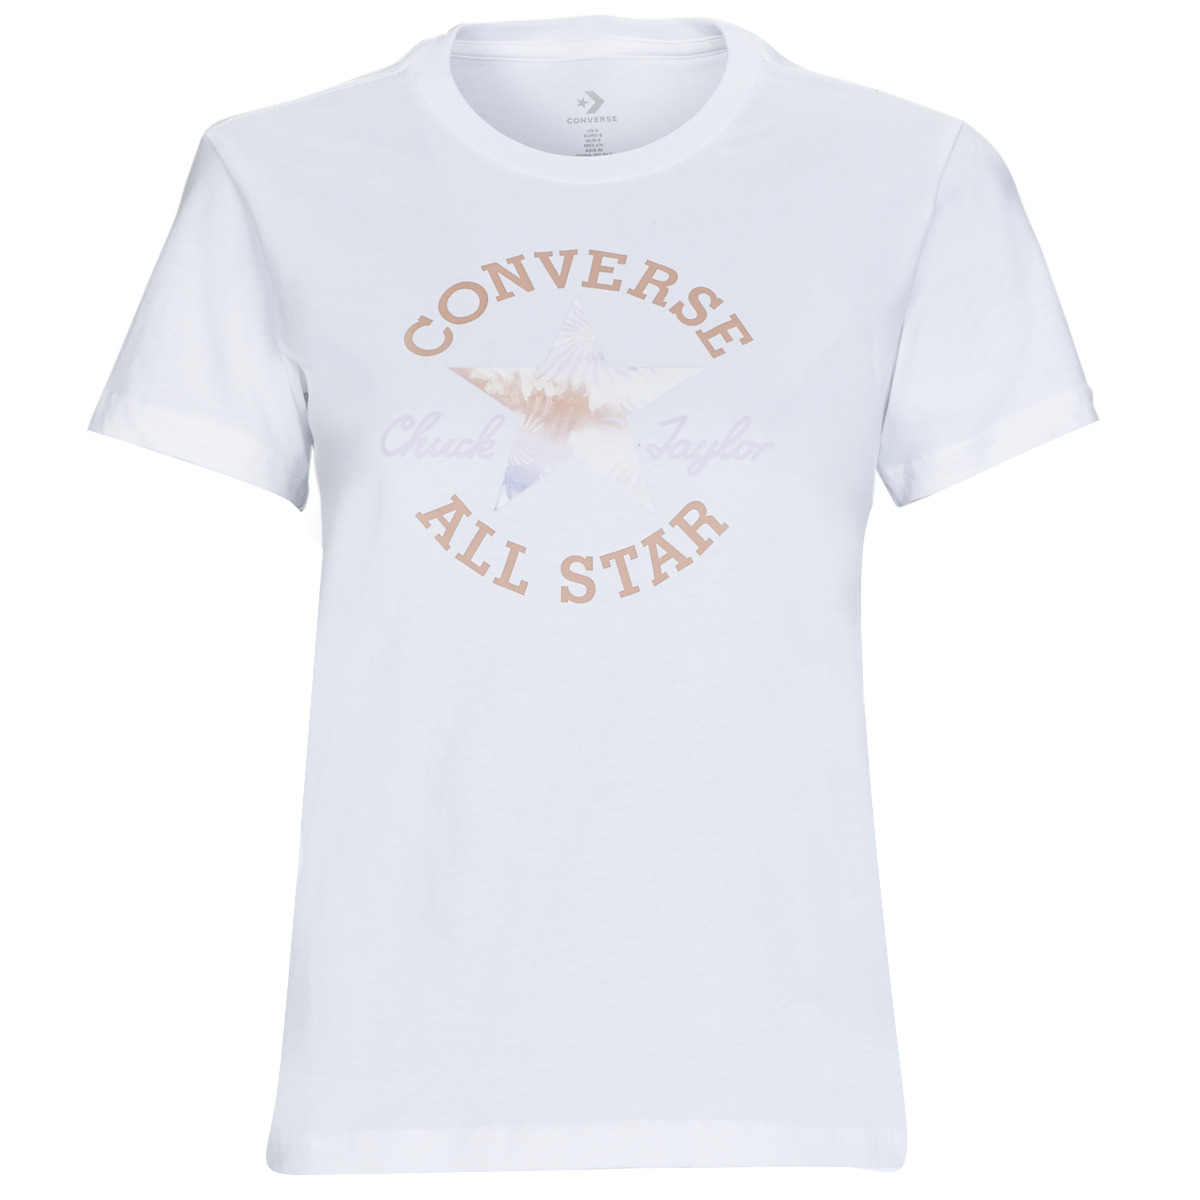 Converse Blanc FLORAL CHUCK TAYLOR ALL STAR PATCH 0Nl2tM9i